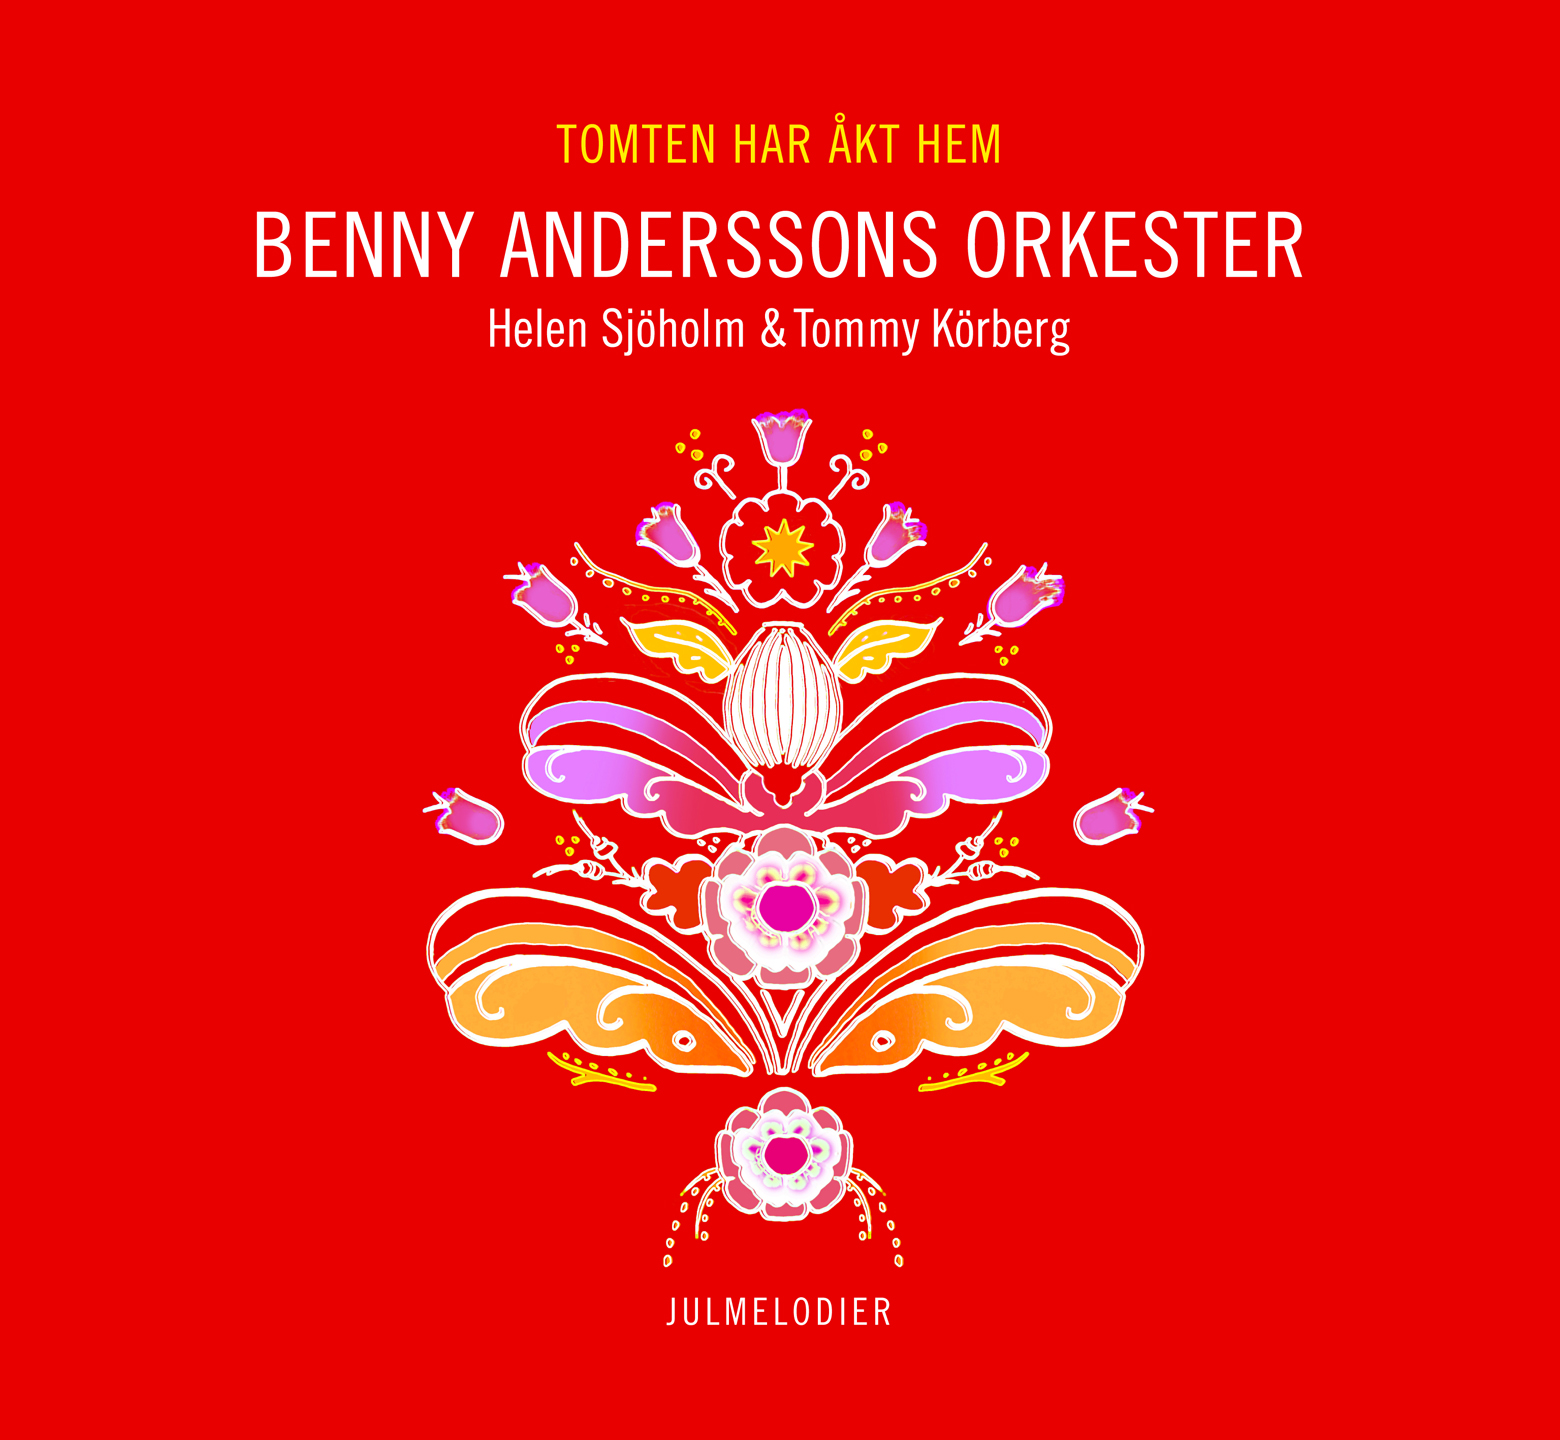 Benny Anderssons Orkester, Helen Sj holm & Tommy K rberg - Tomten har  kt hem - CD